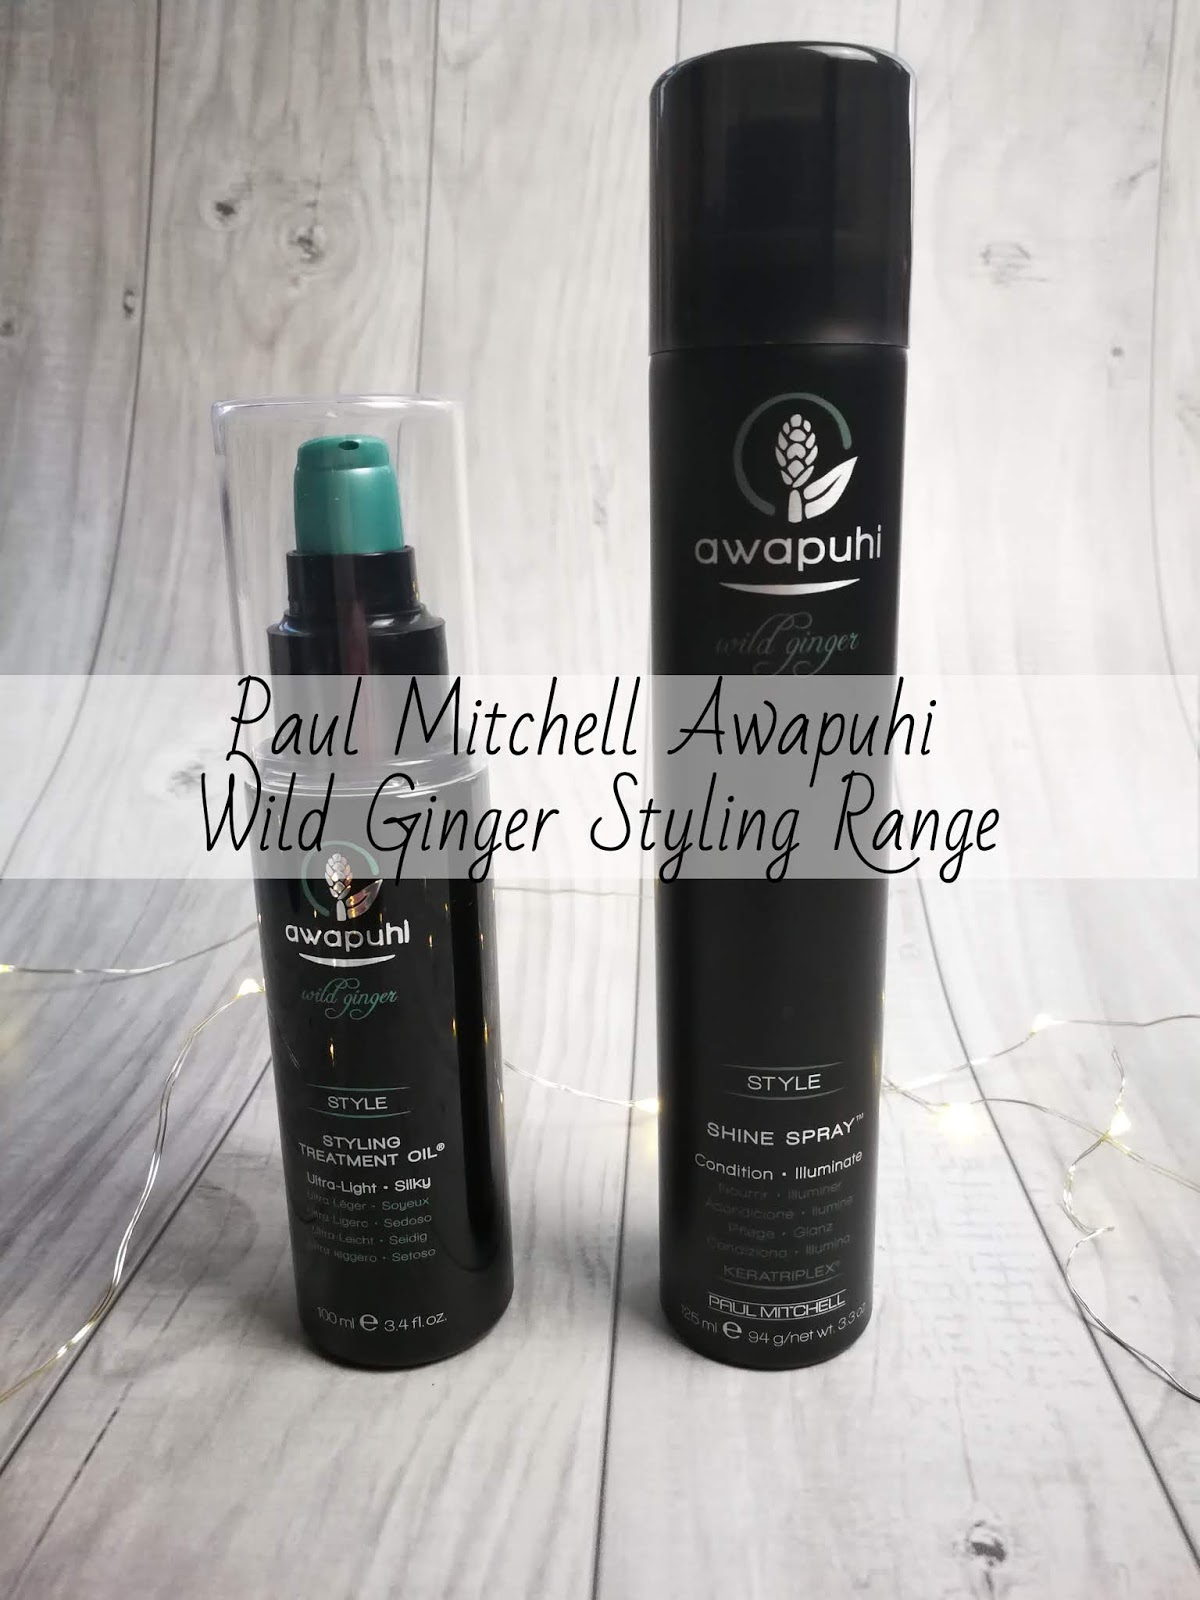 Paul Mitchell Awapuhi Wild Ginger Styling Range